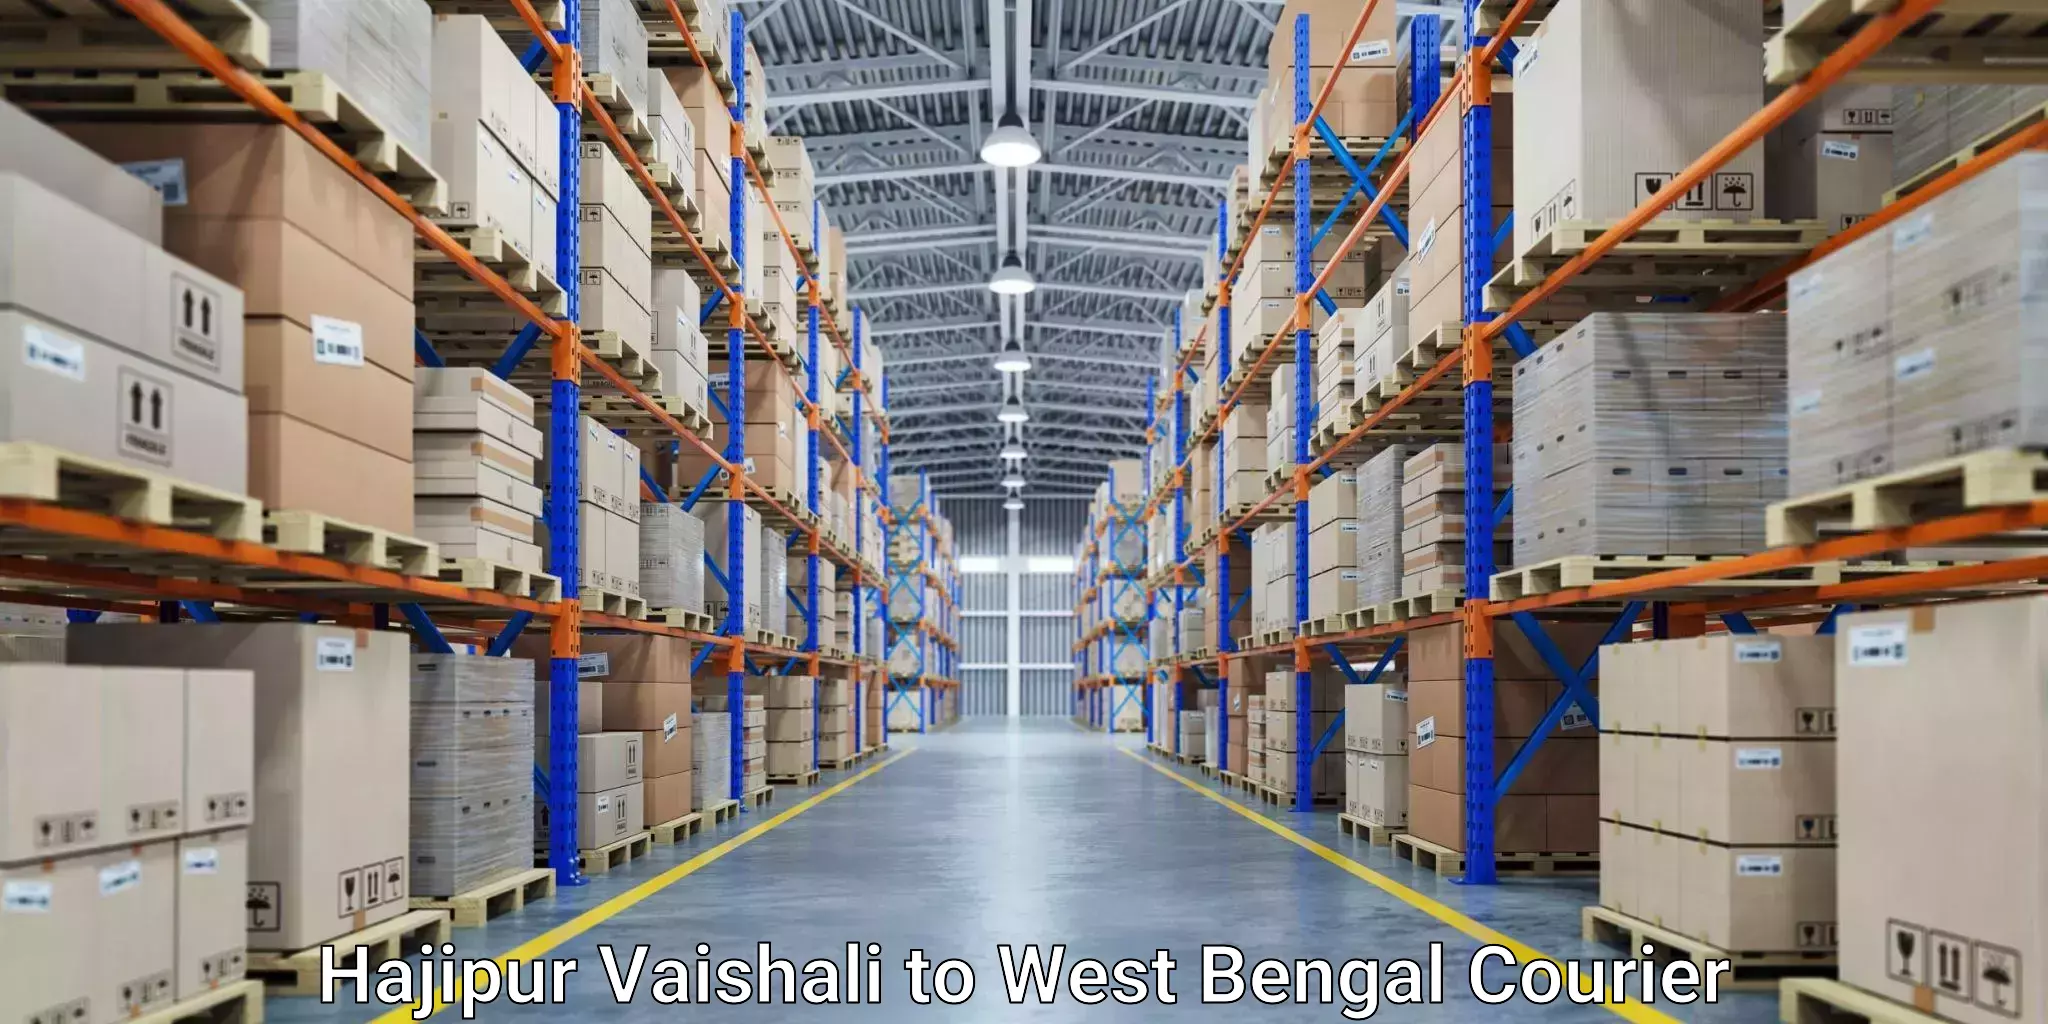 24-hour courier service Hajipur Vaishali to West Bengal